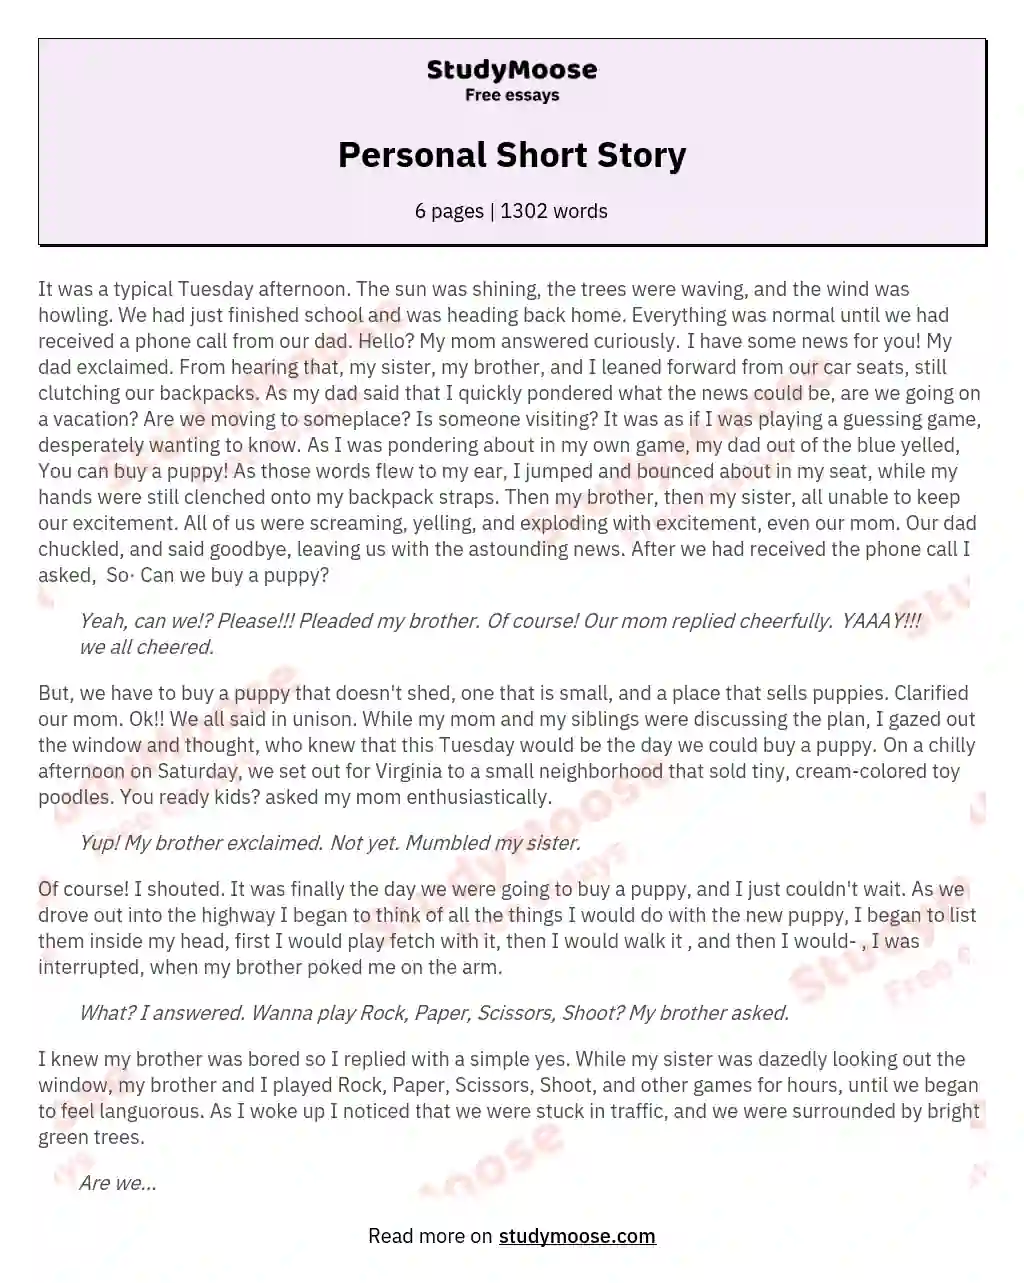 Personal Short Story essay